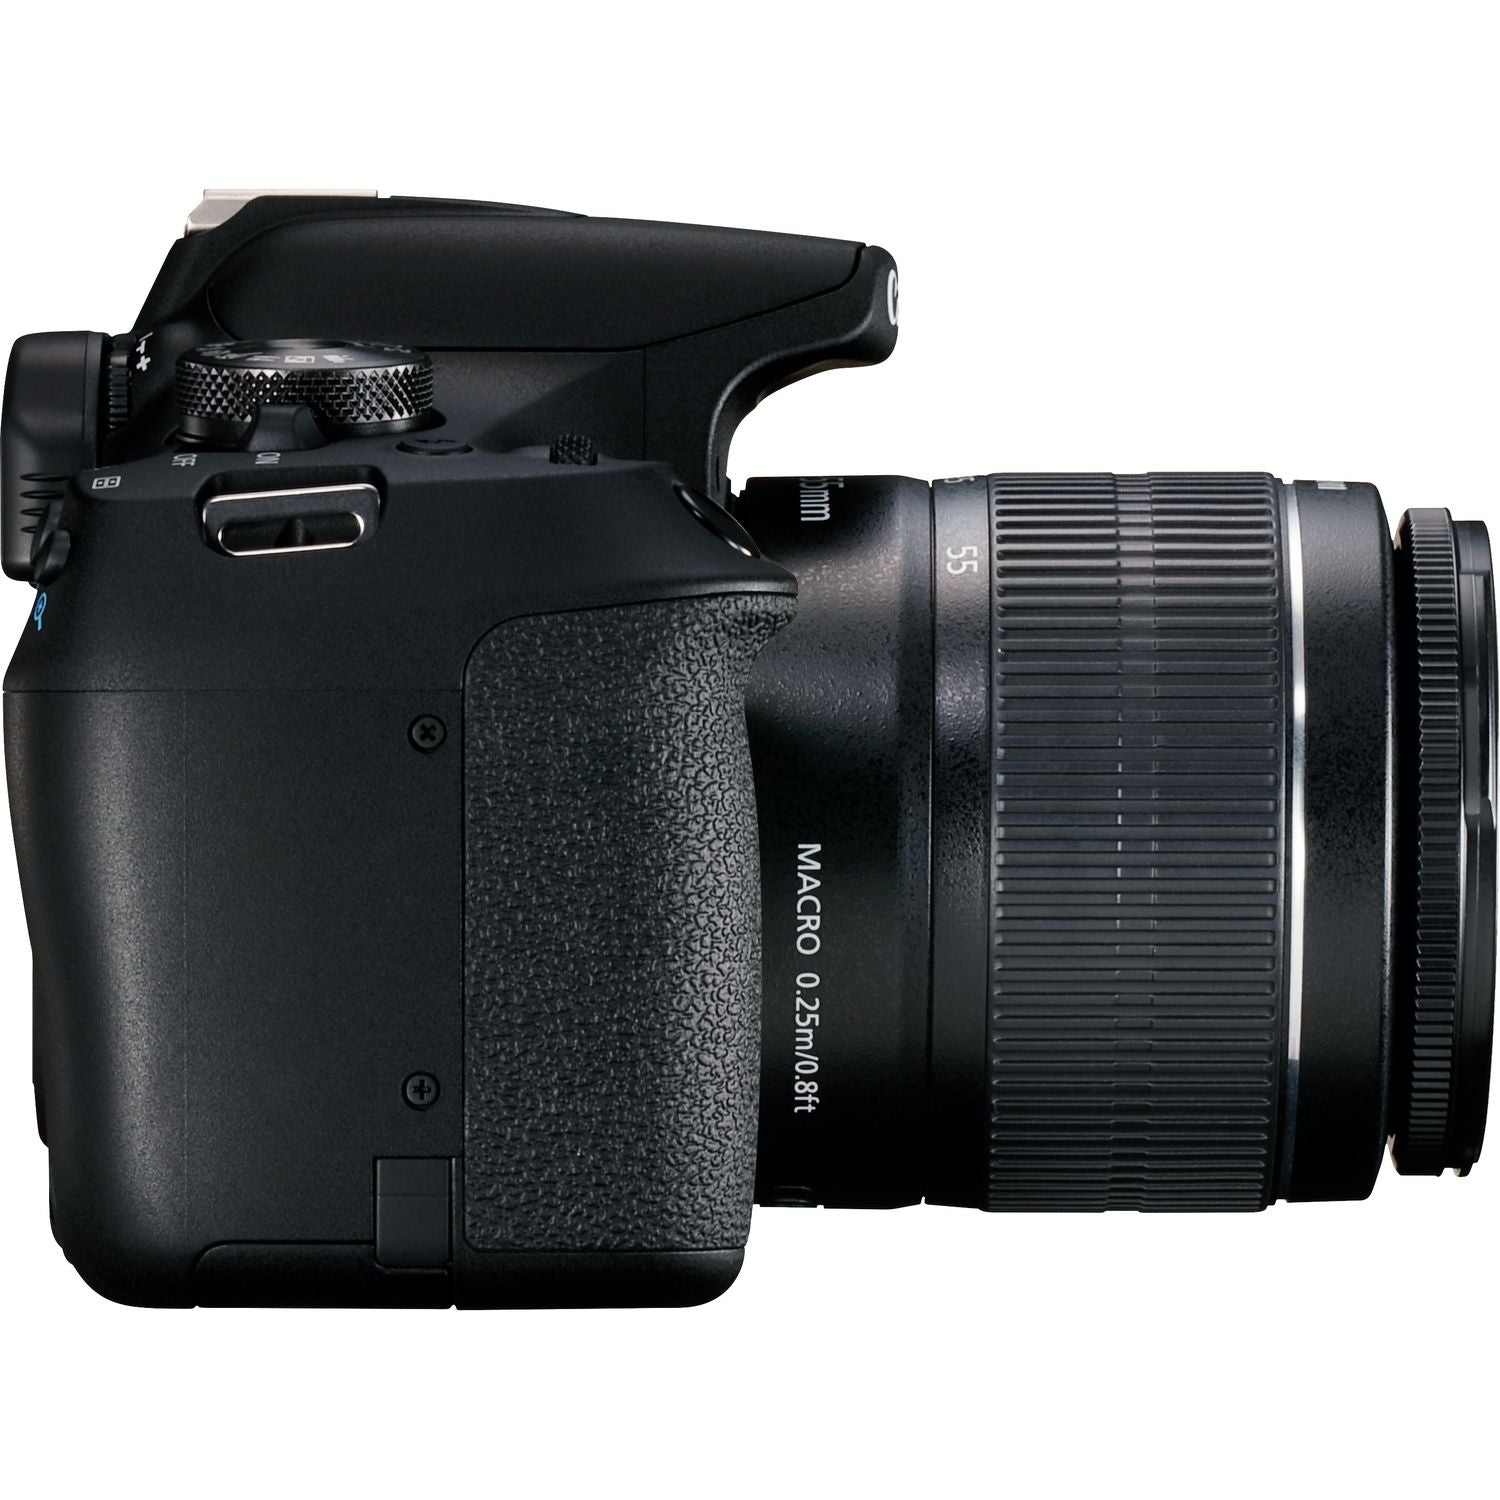 Canon EOS 2000D Digital SLR Camera + EF-S 18-55mm f/3.5-5.6 IS II Kit